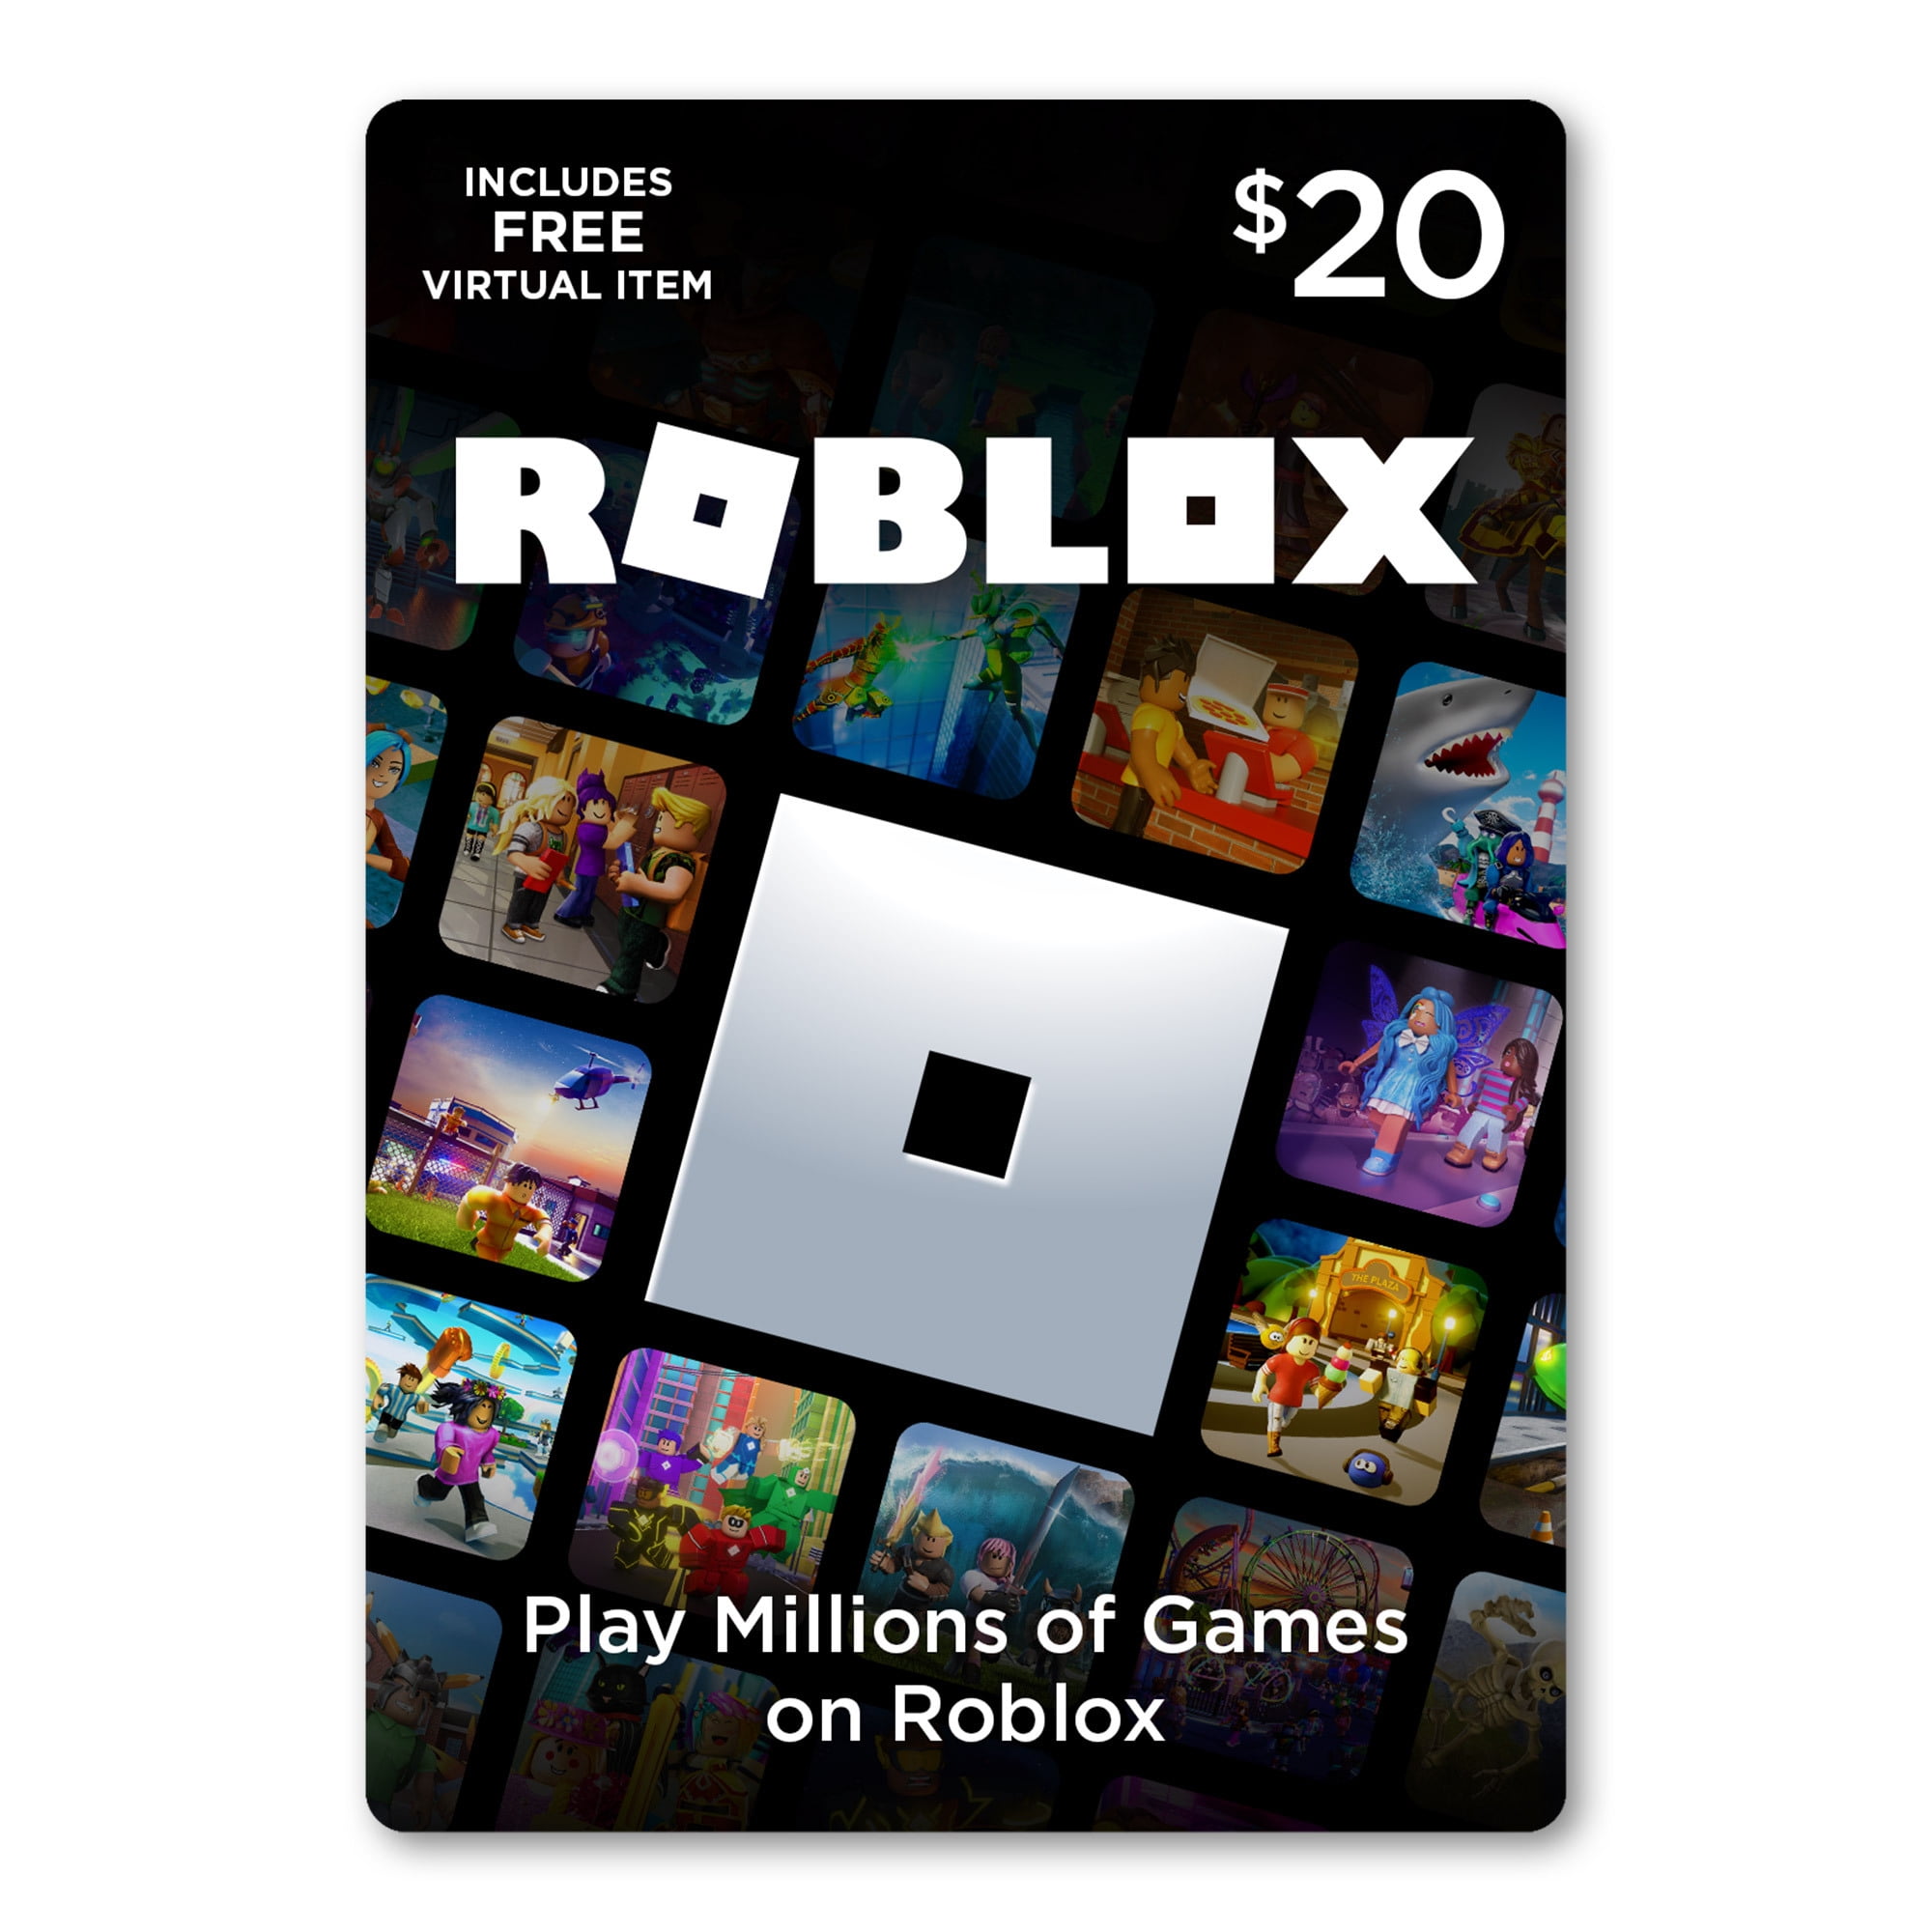 Roblox 20 Digital Gift Card Includes Exclusive Virtual Item Digital Download Walmart Com Walmart Com - roblox gift card walamrt